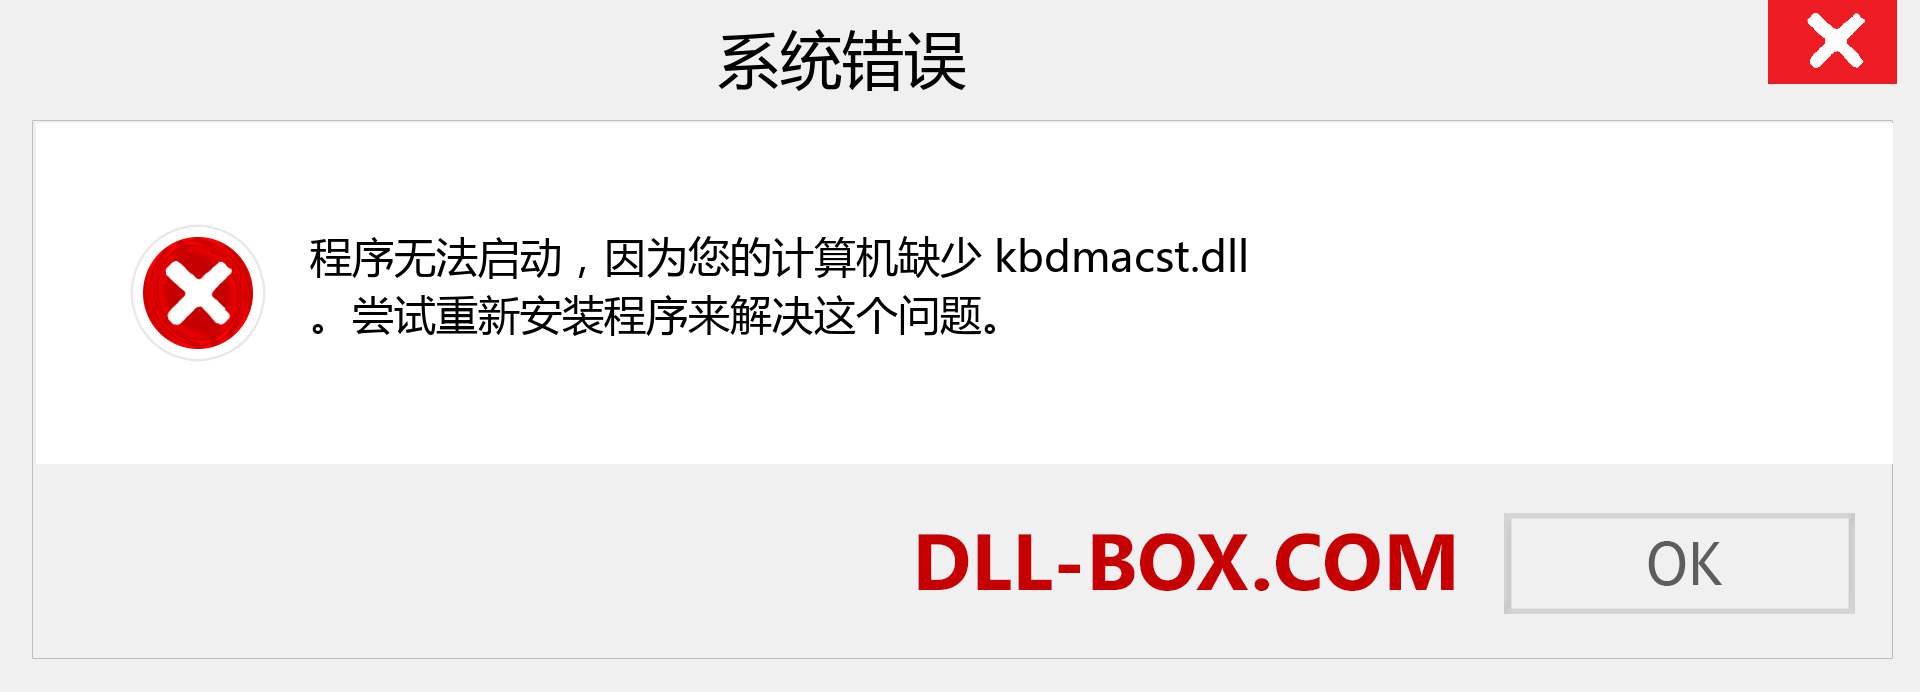 kbdmacst.dll 文件丢失？。 适用于 Windows 7、8、10 的下载 - 修复 Windows、照片、图像上的 kbdmacst dll 丢失错误